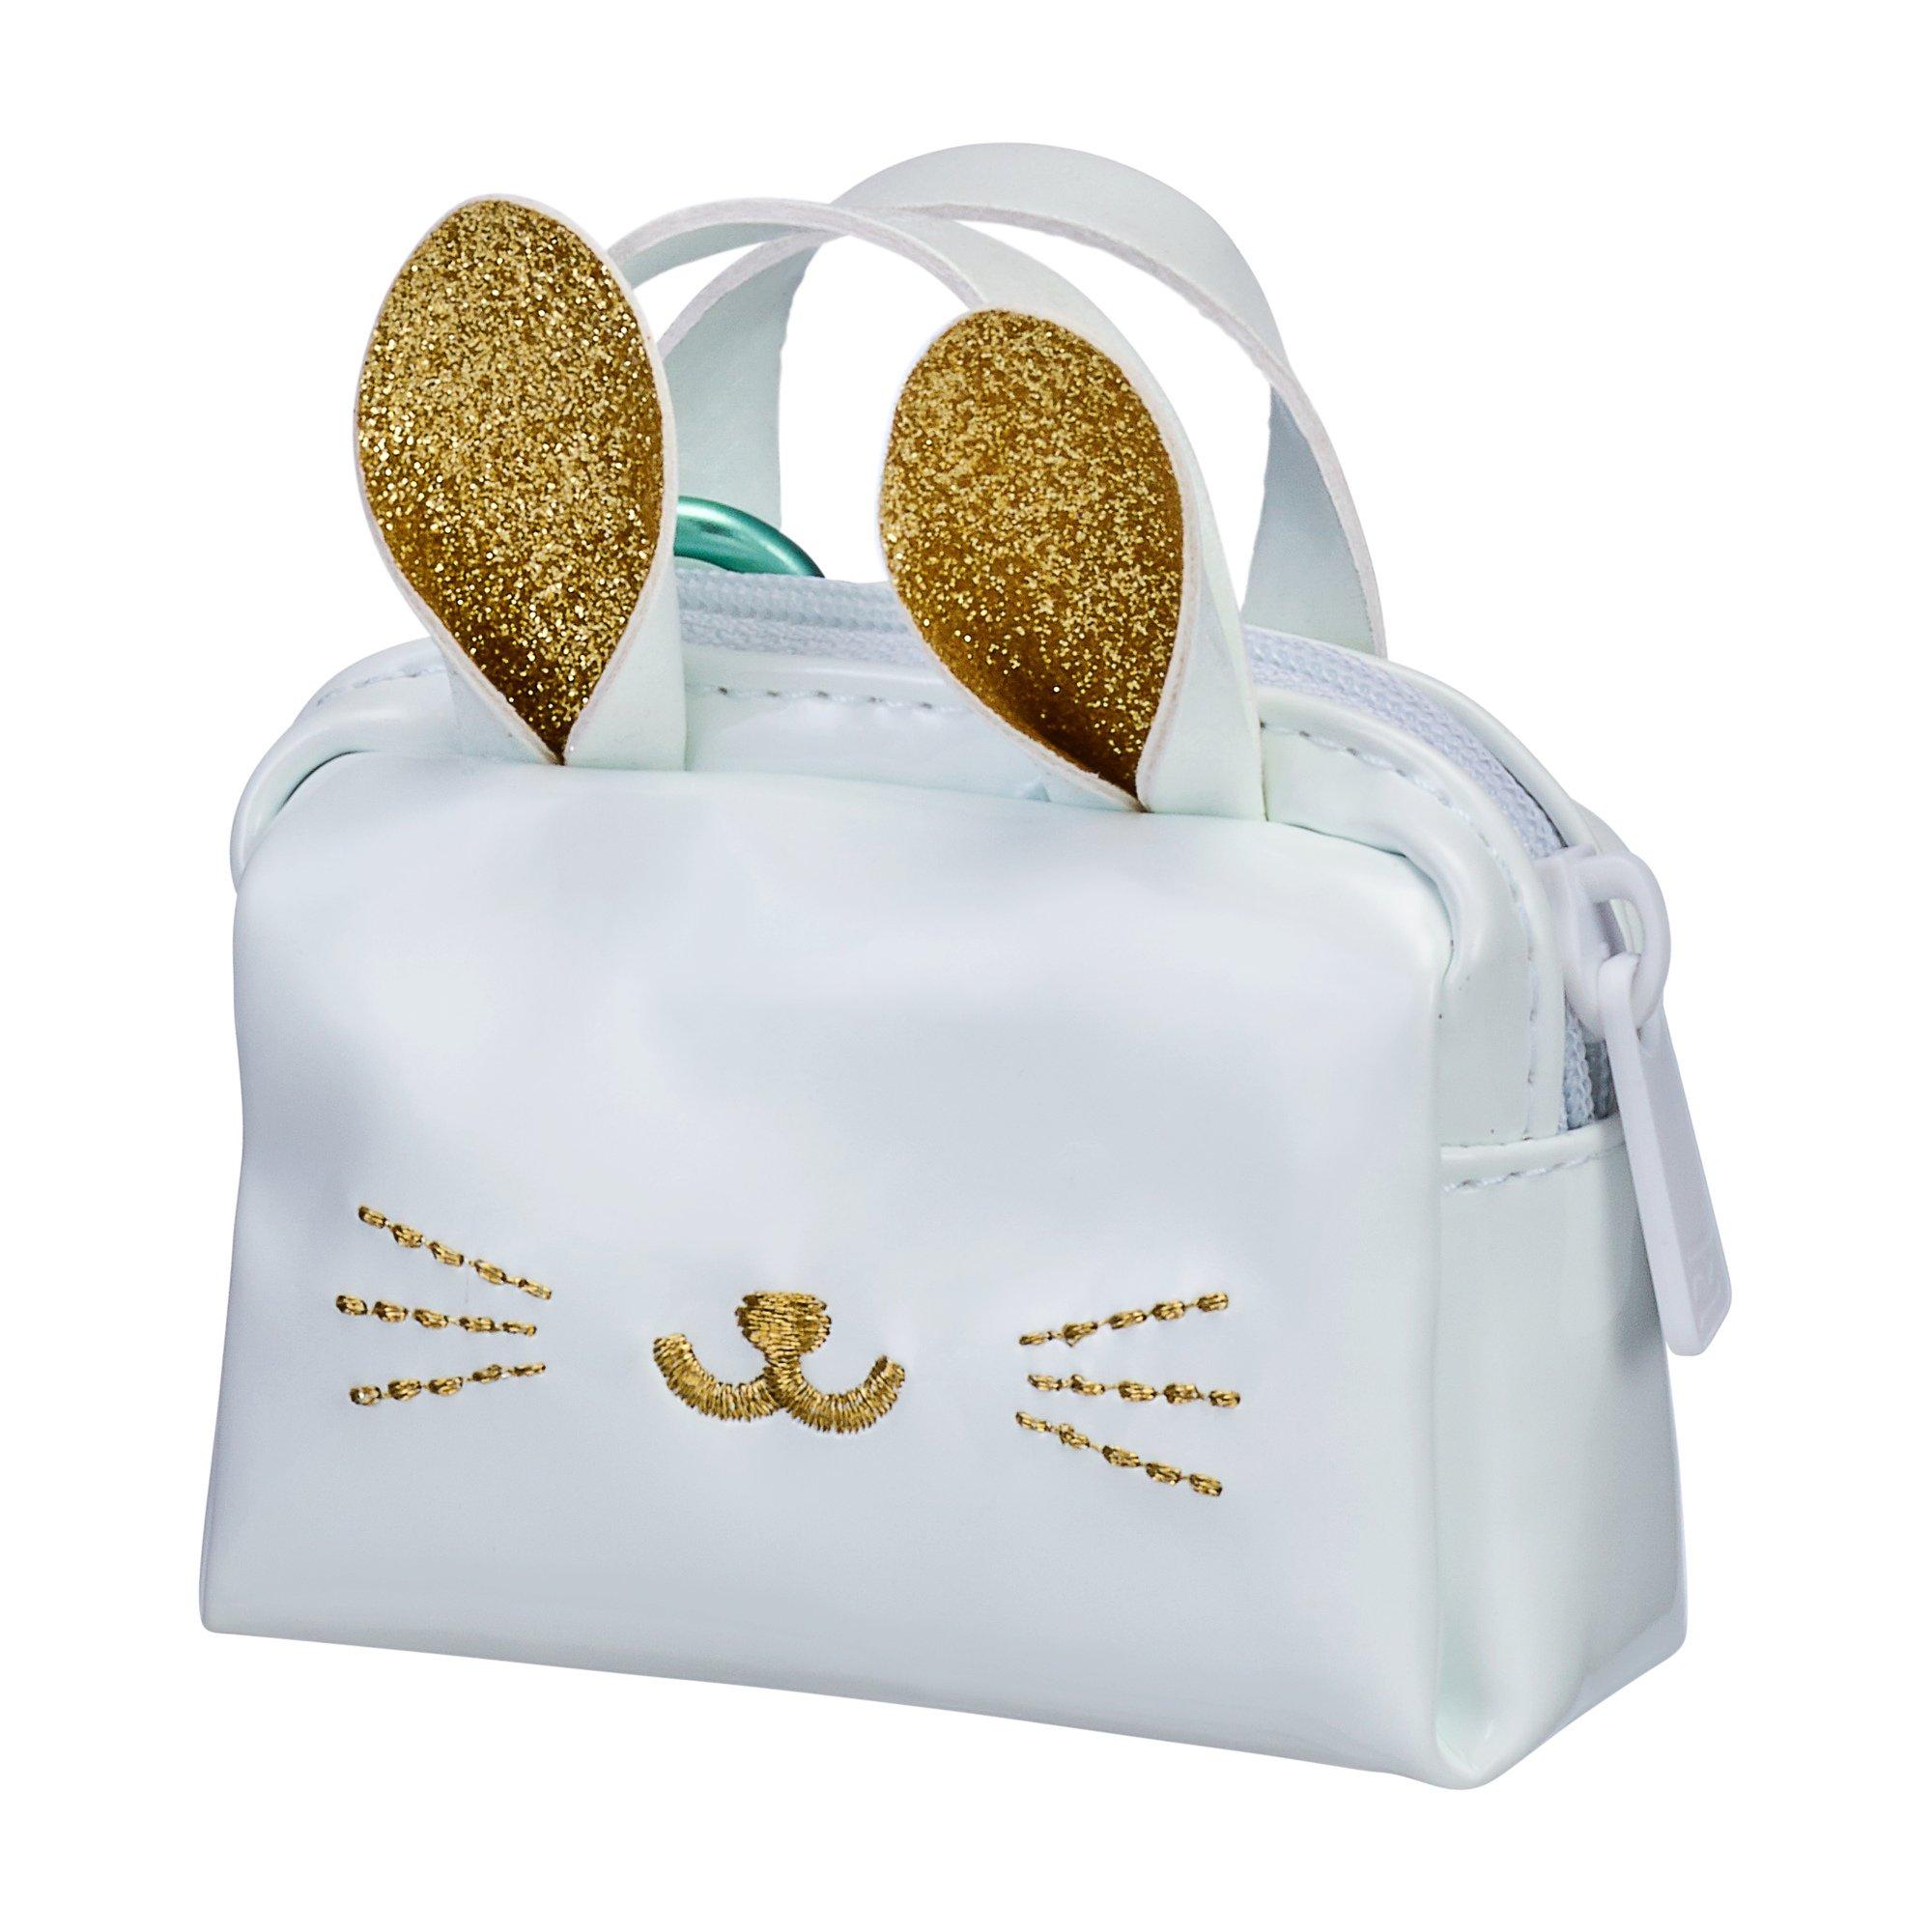 Real Littles Collectible Micro Handbag Collection 5 Exclusive Bags